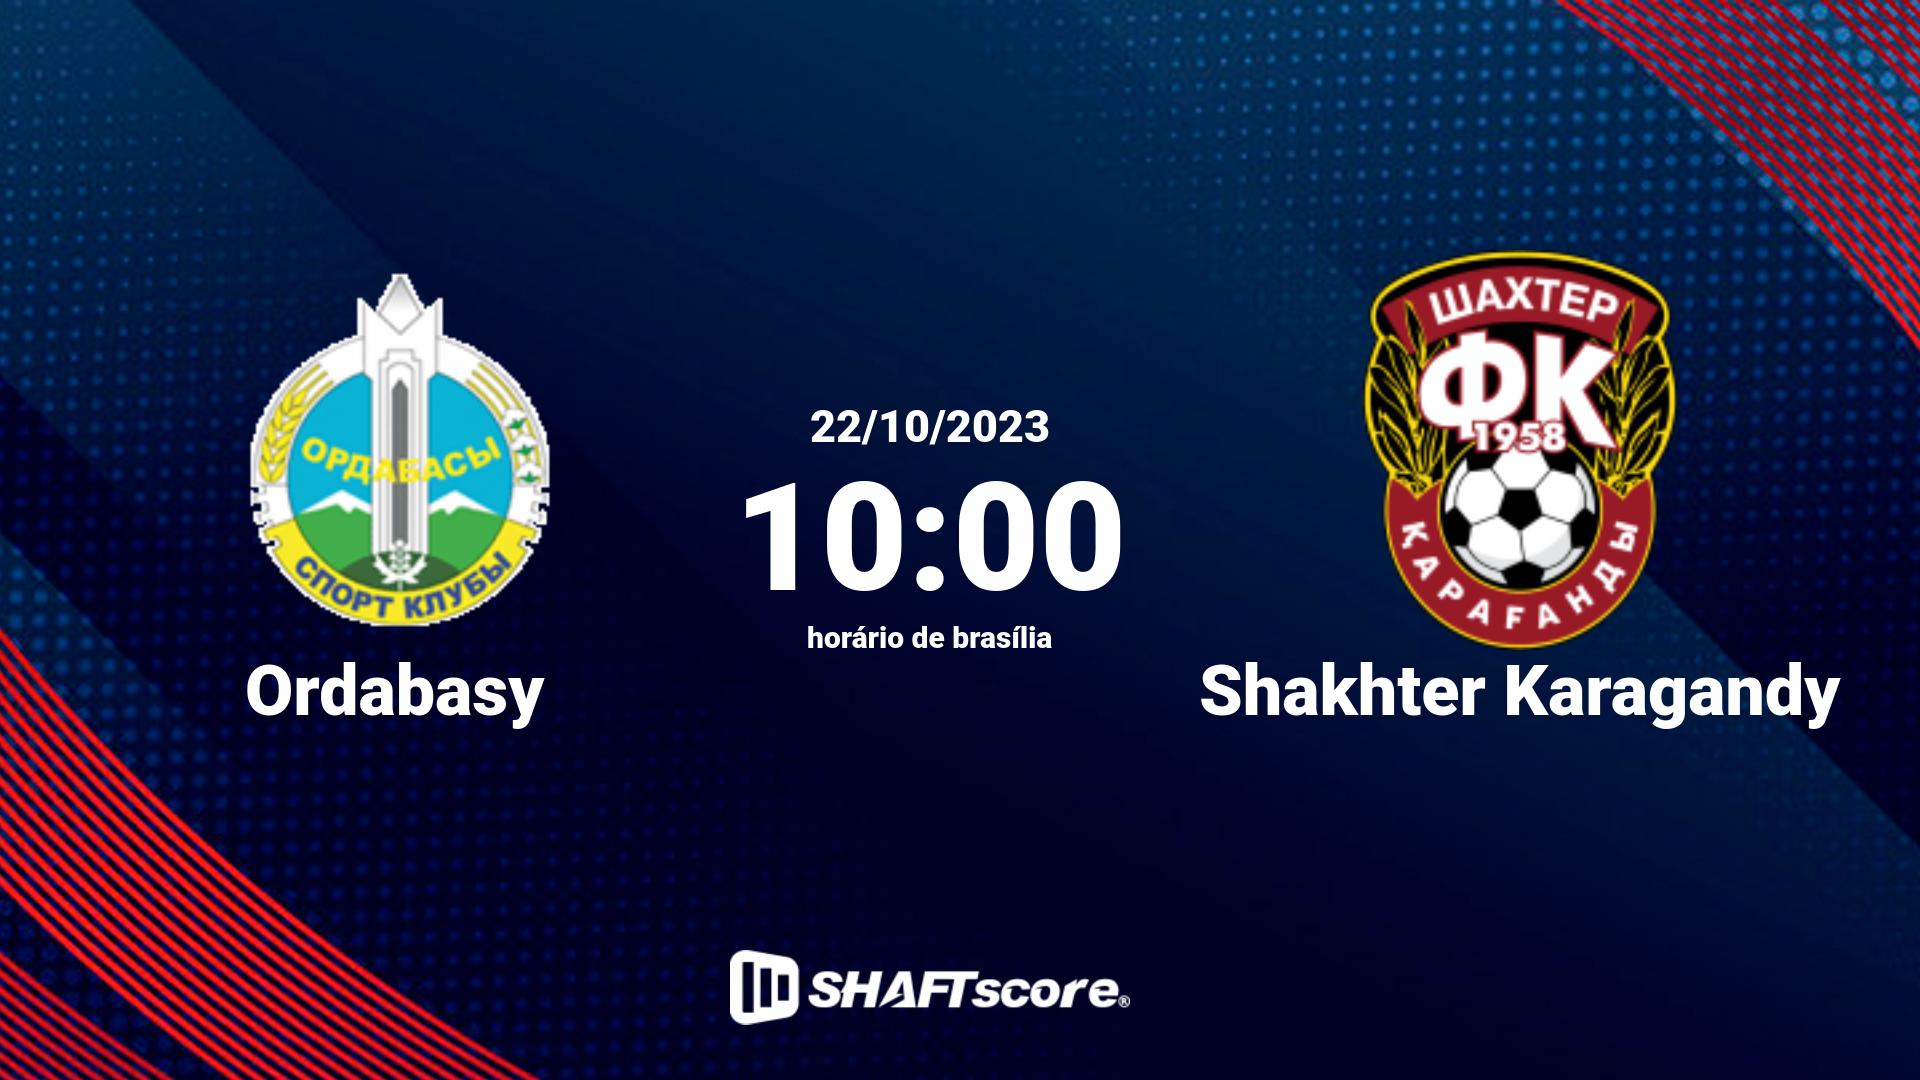 Estatísticas do jogo Ordabasy vs Shakhter Karagandy 22.10 10:00